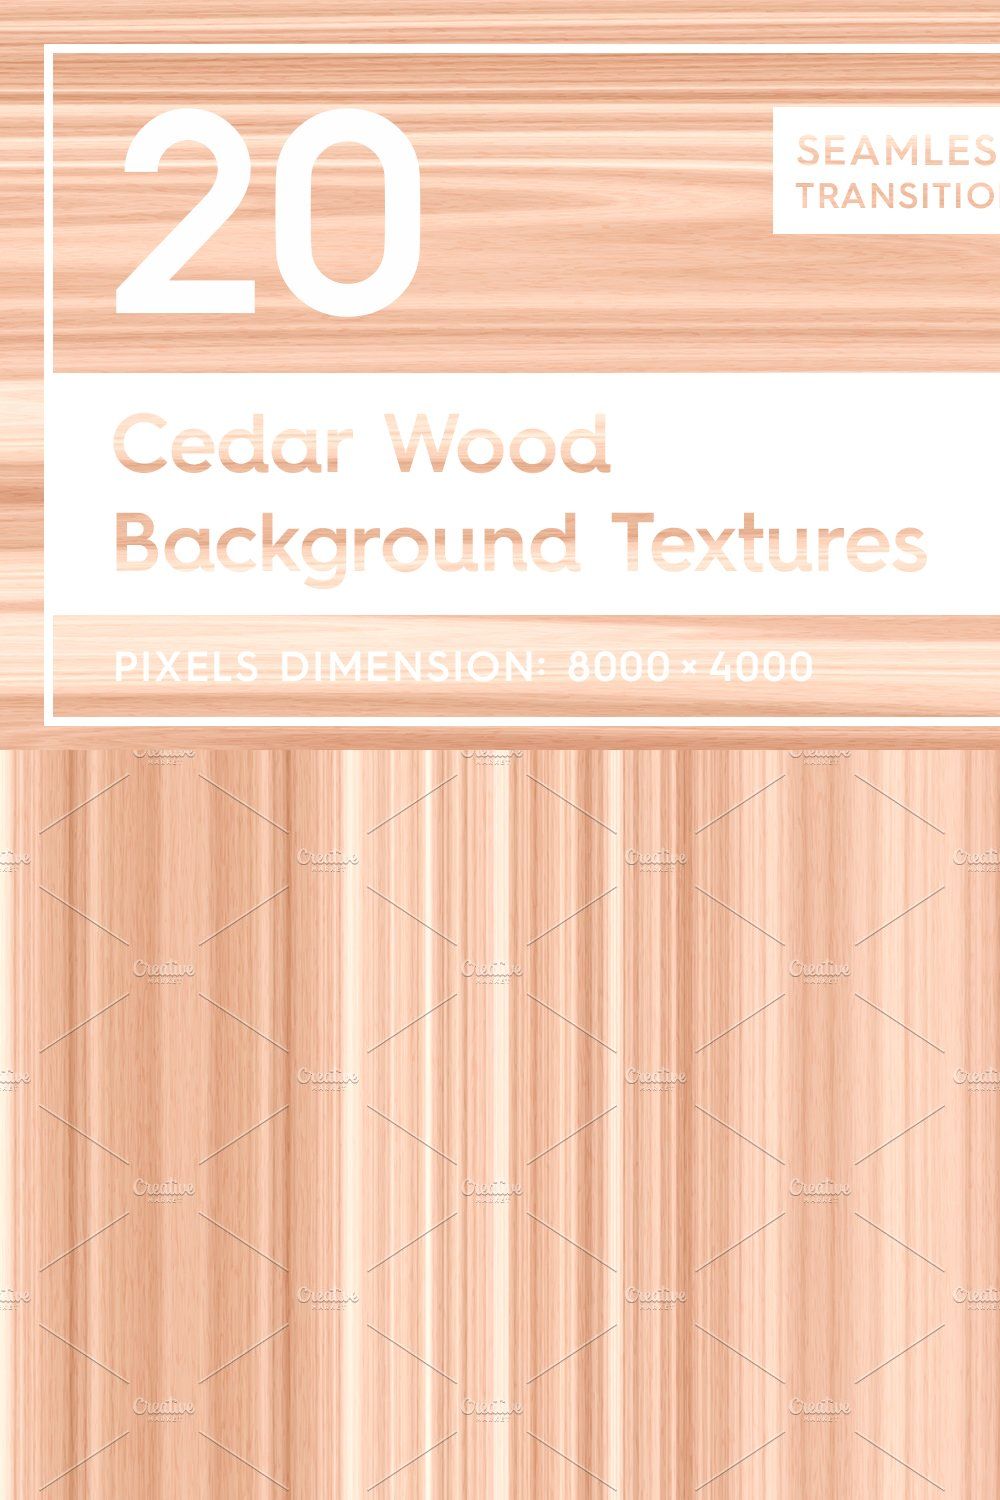 20 Cedar Wood Background Textures pinterest preview image.